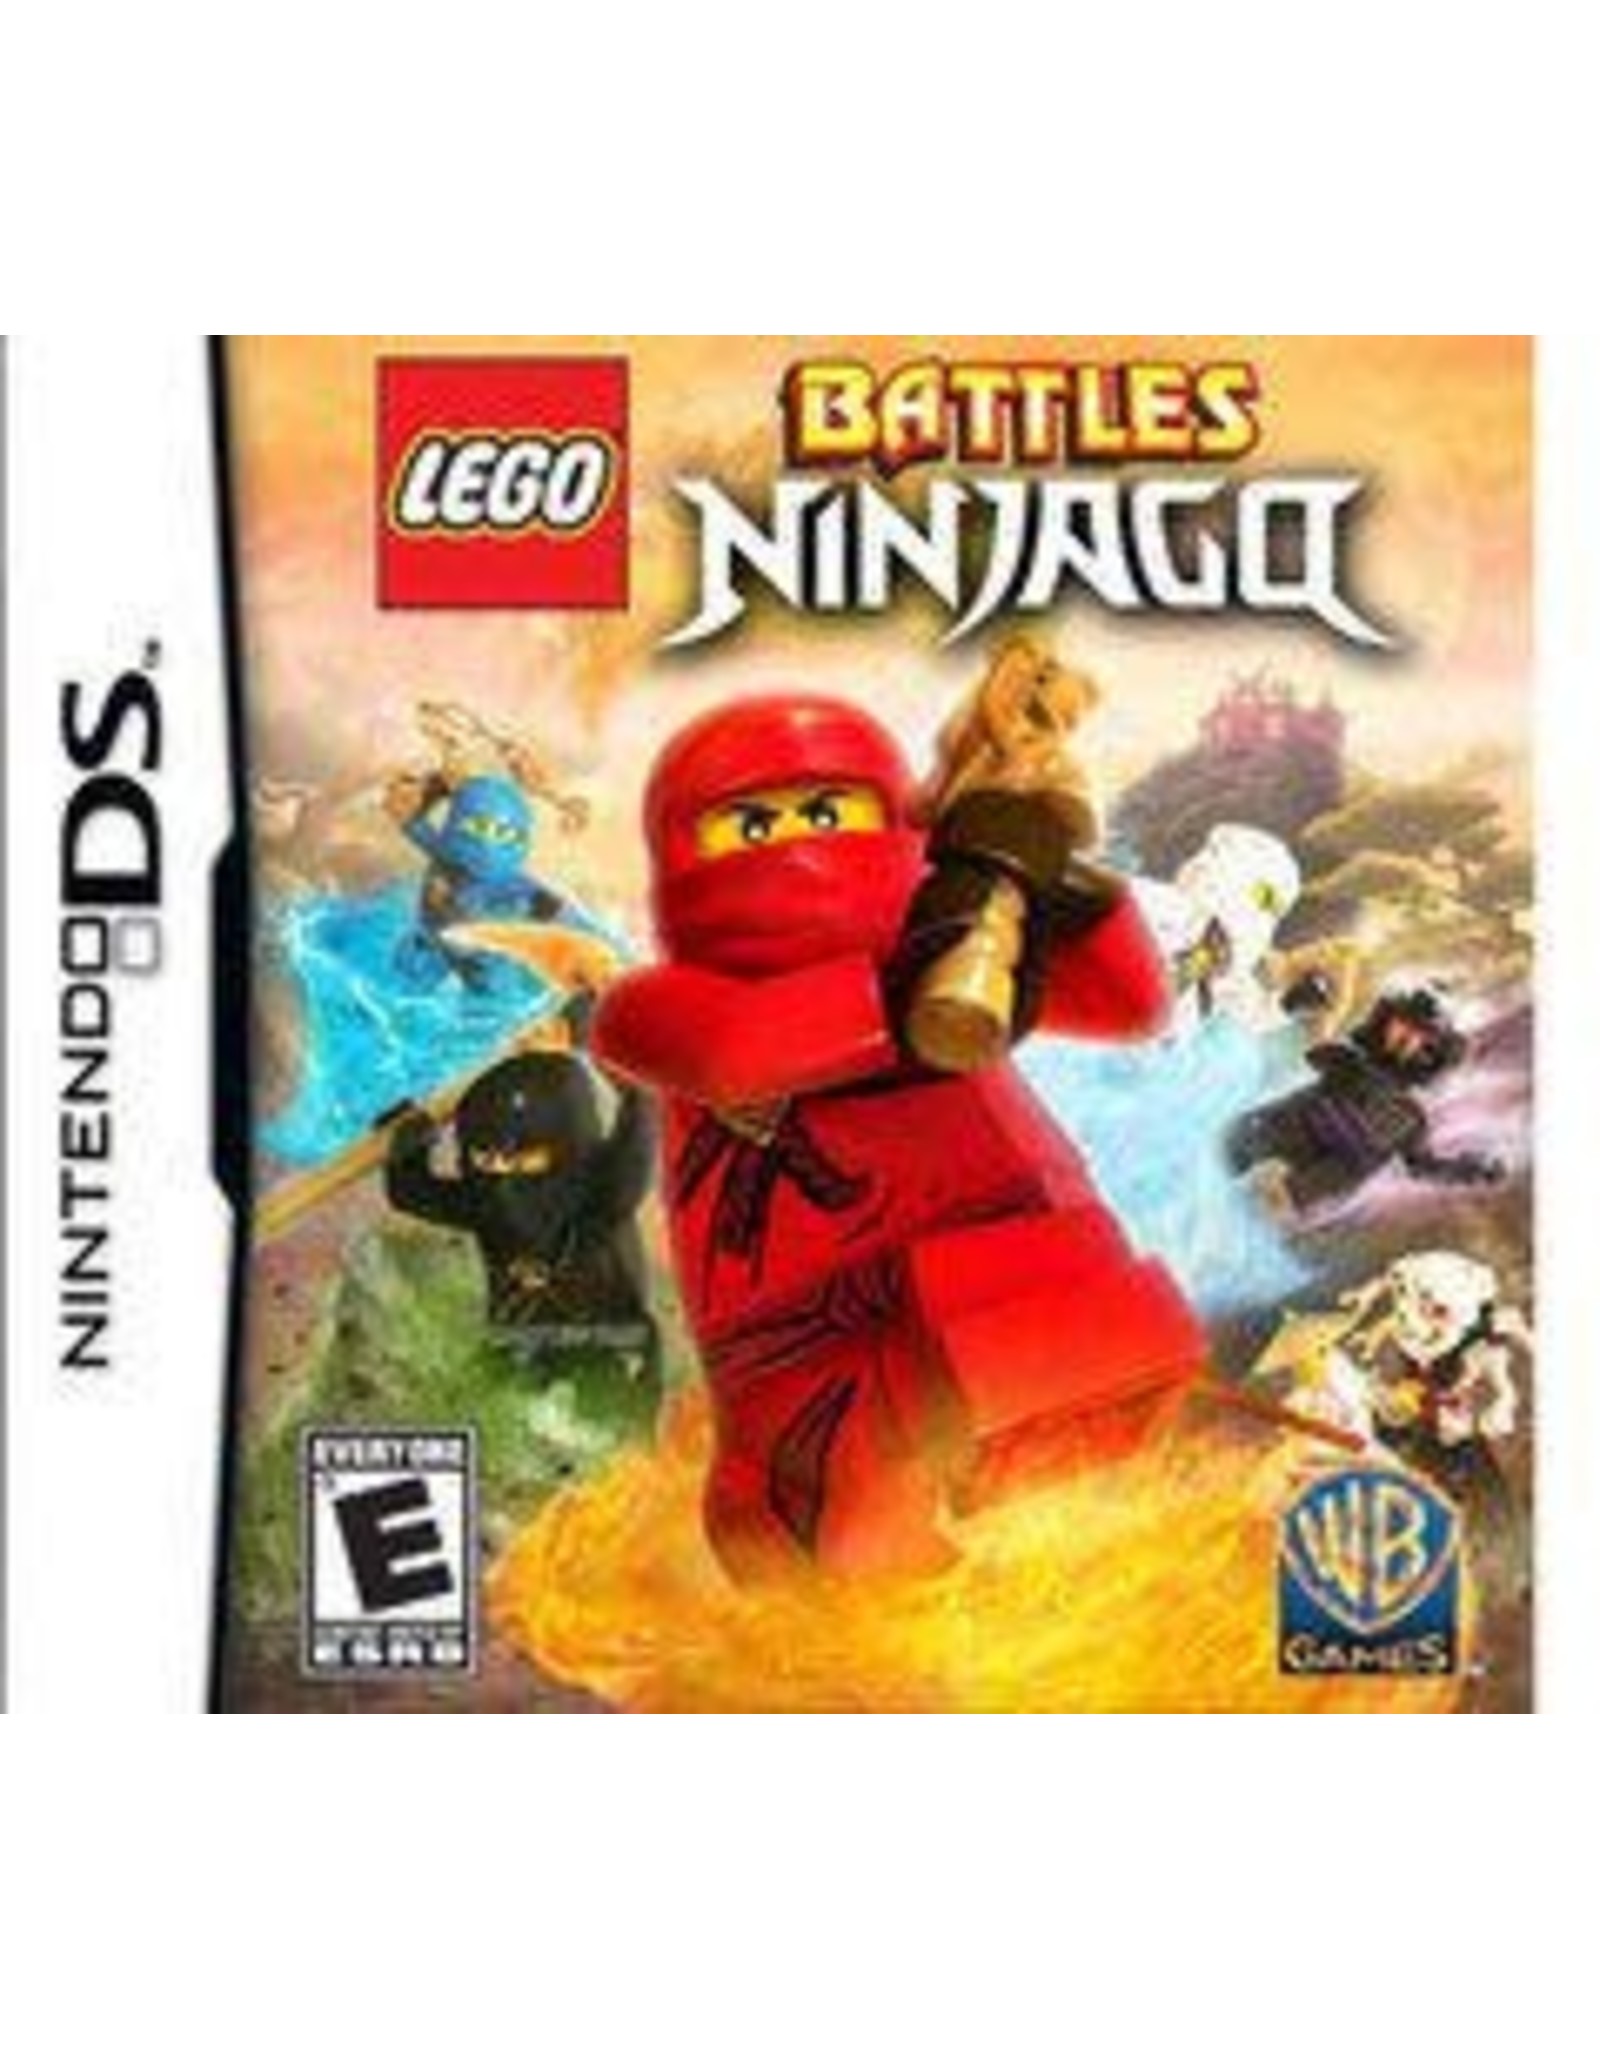 Nintendo DS LEGO Battles: Ninjago (CiB)